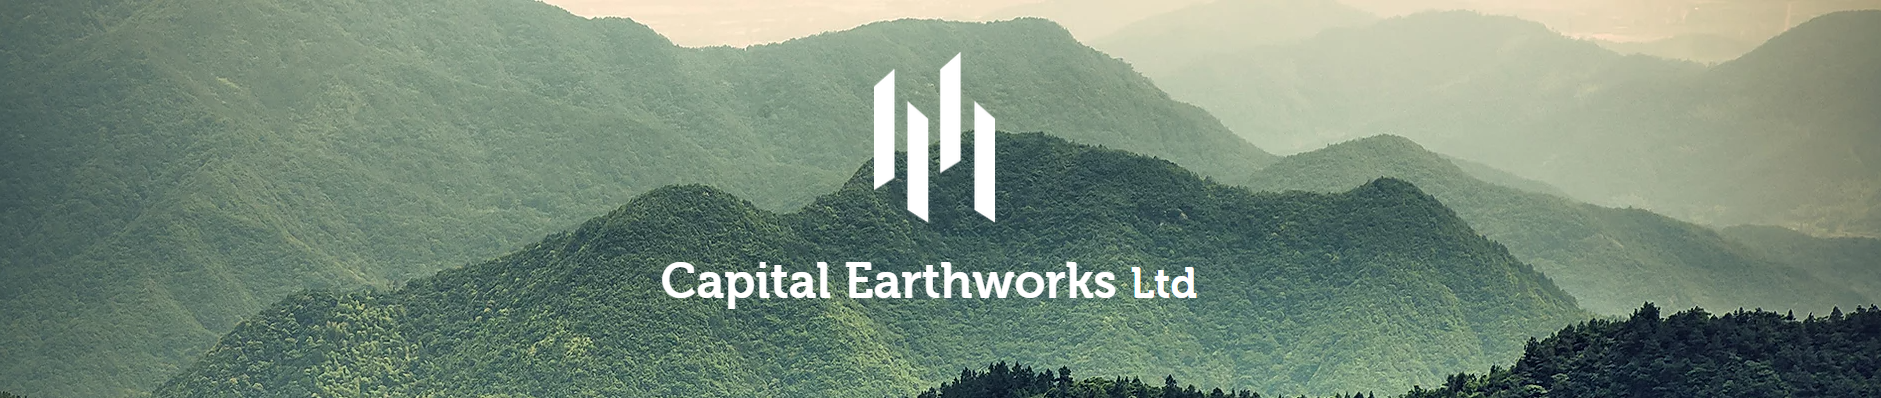 Capital earthworks header